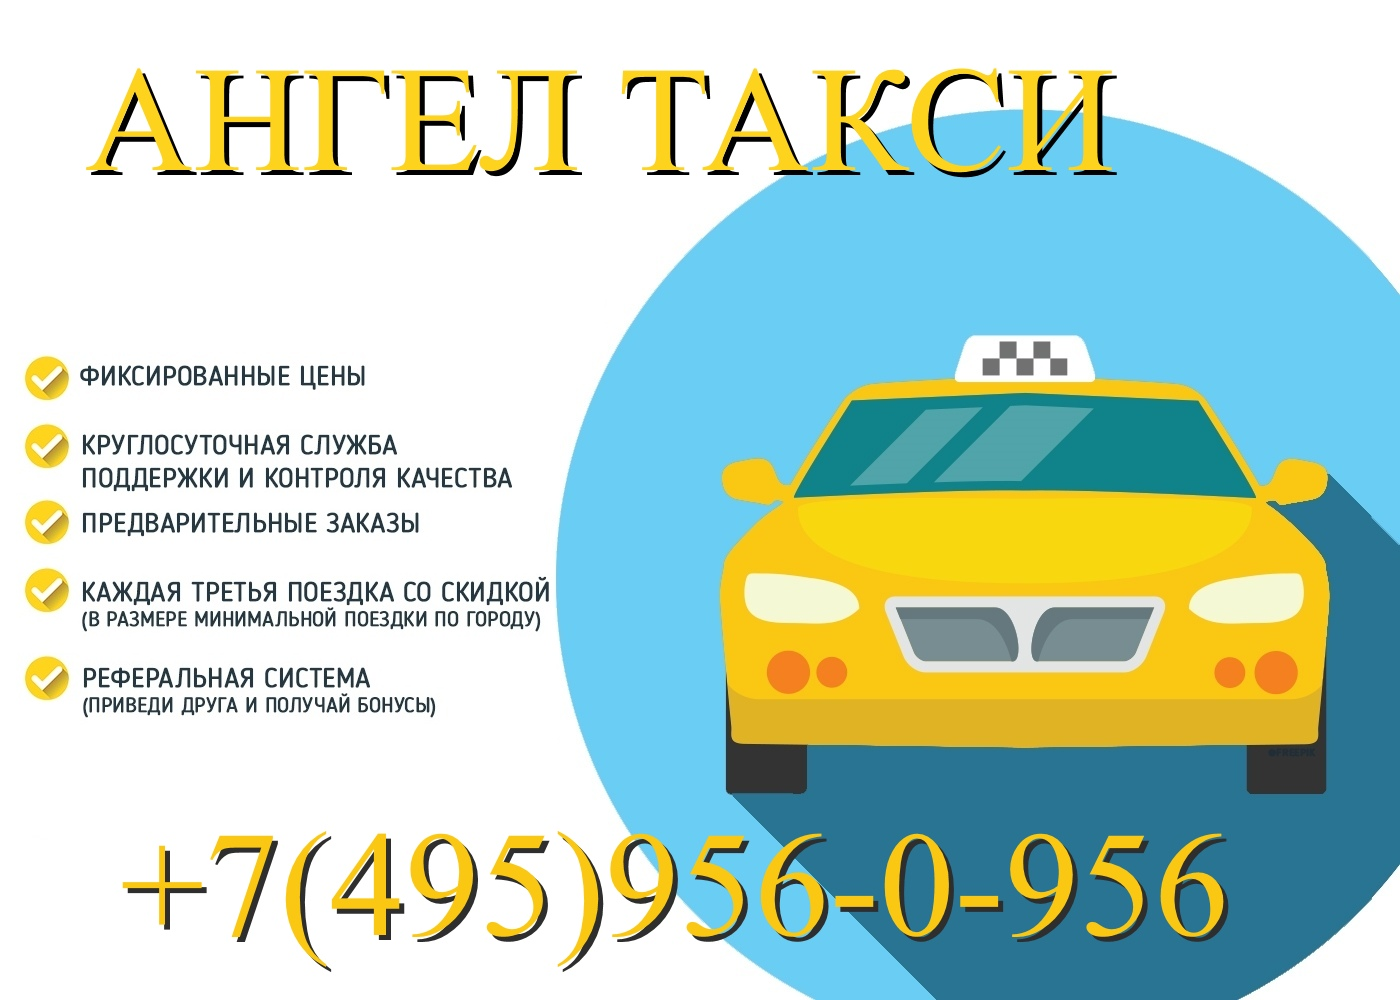 Номер телефона доставки такси. Визитка такси. Такси ангел. Реклама такси. Междугородние поездки такси.